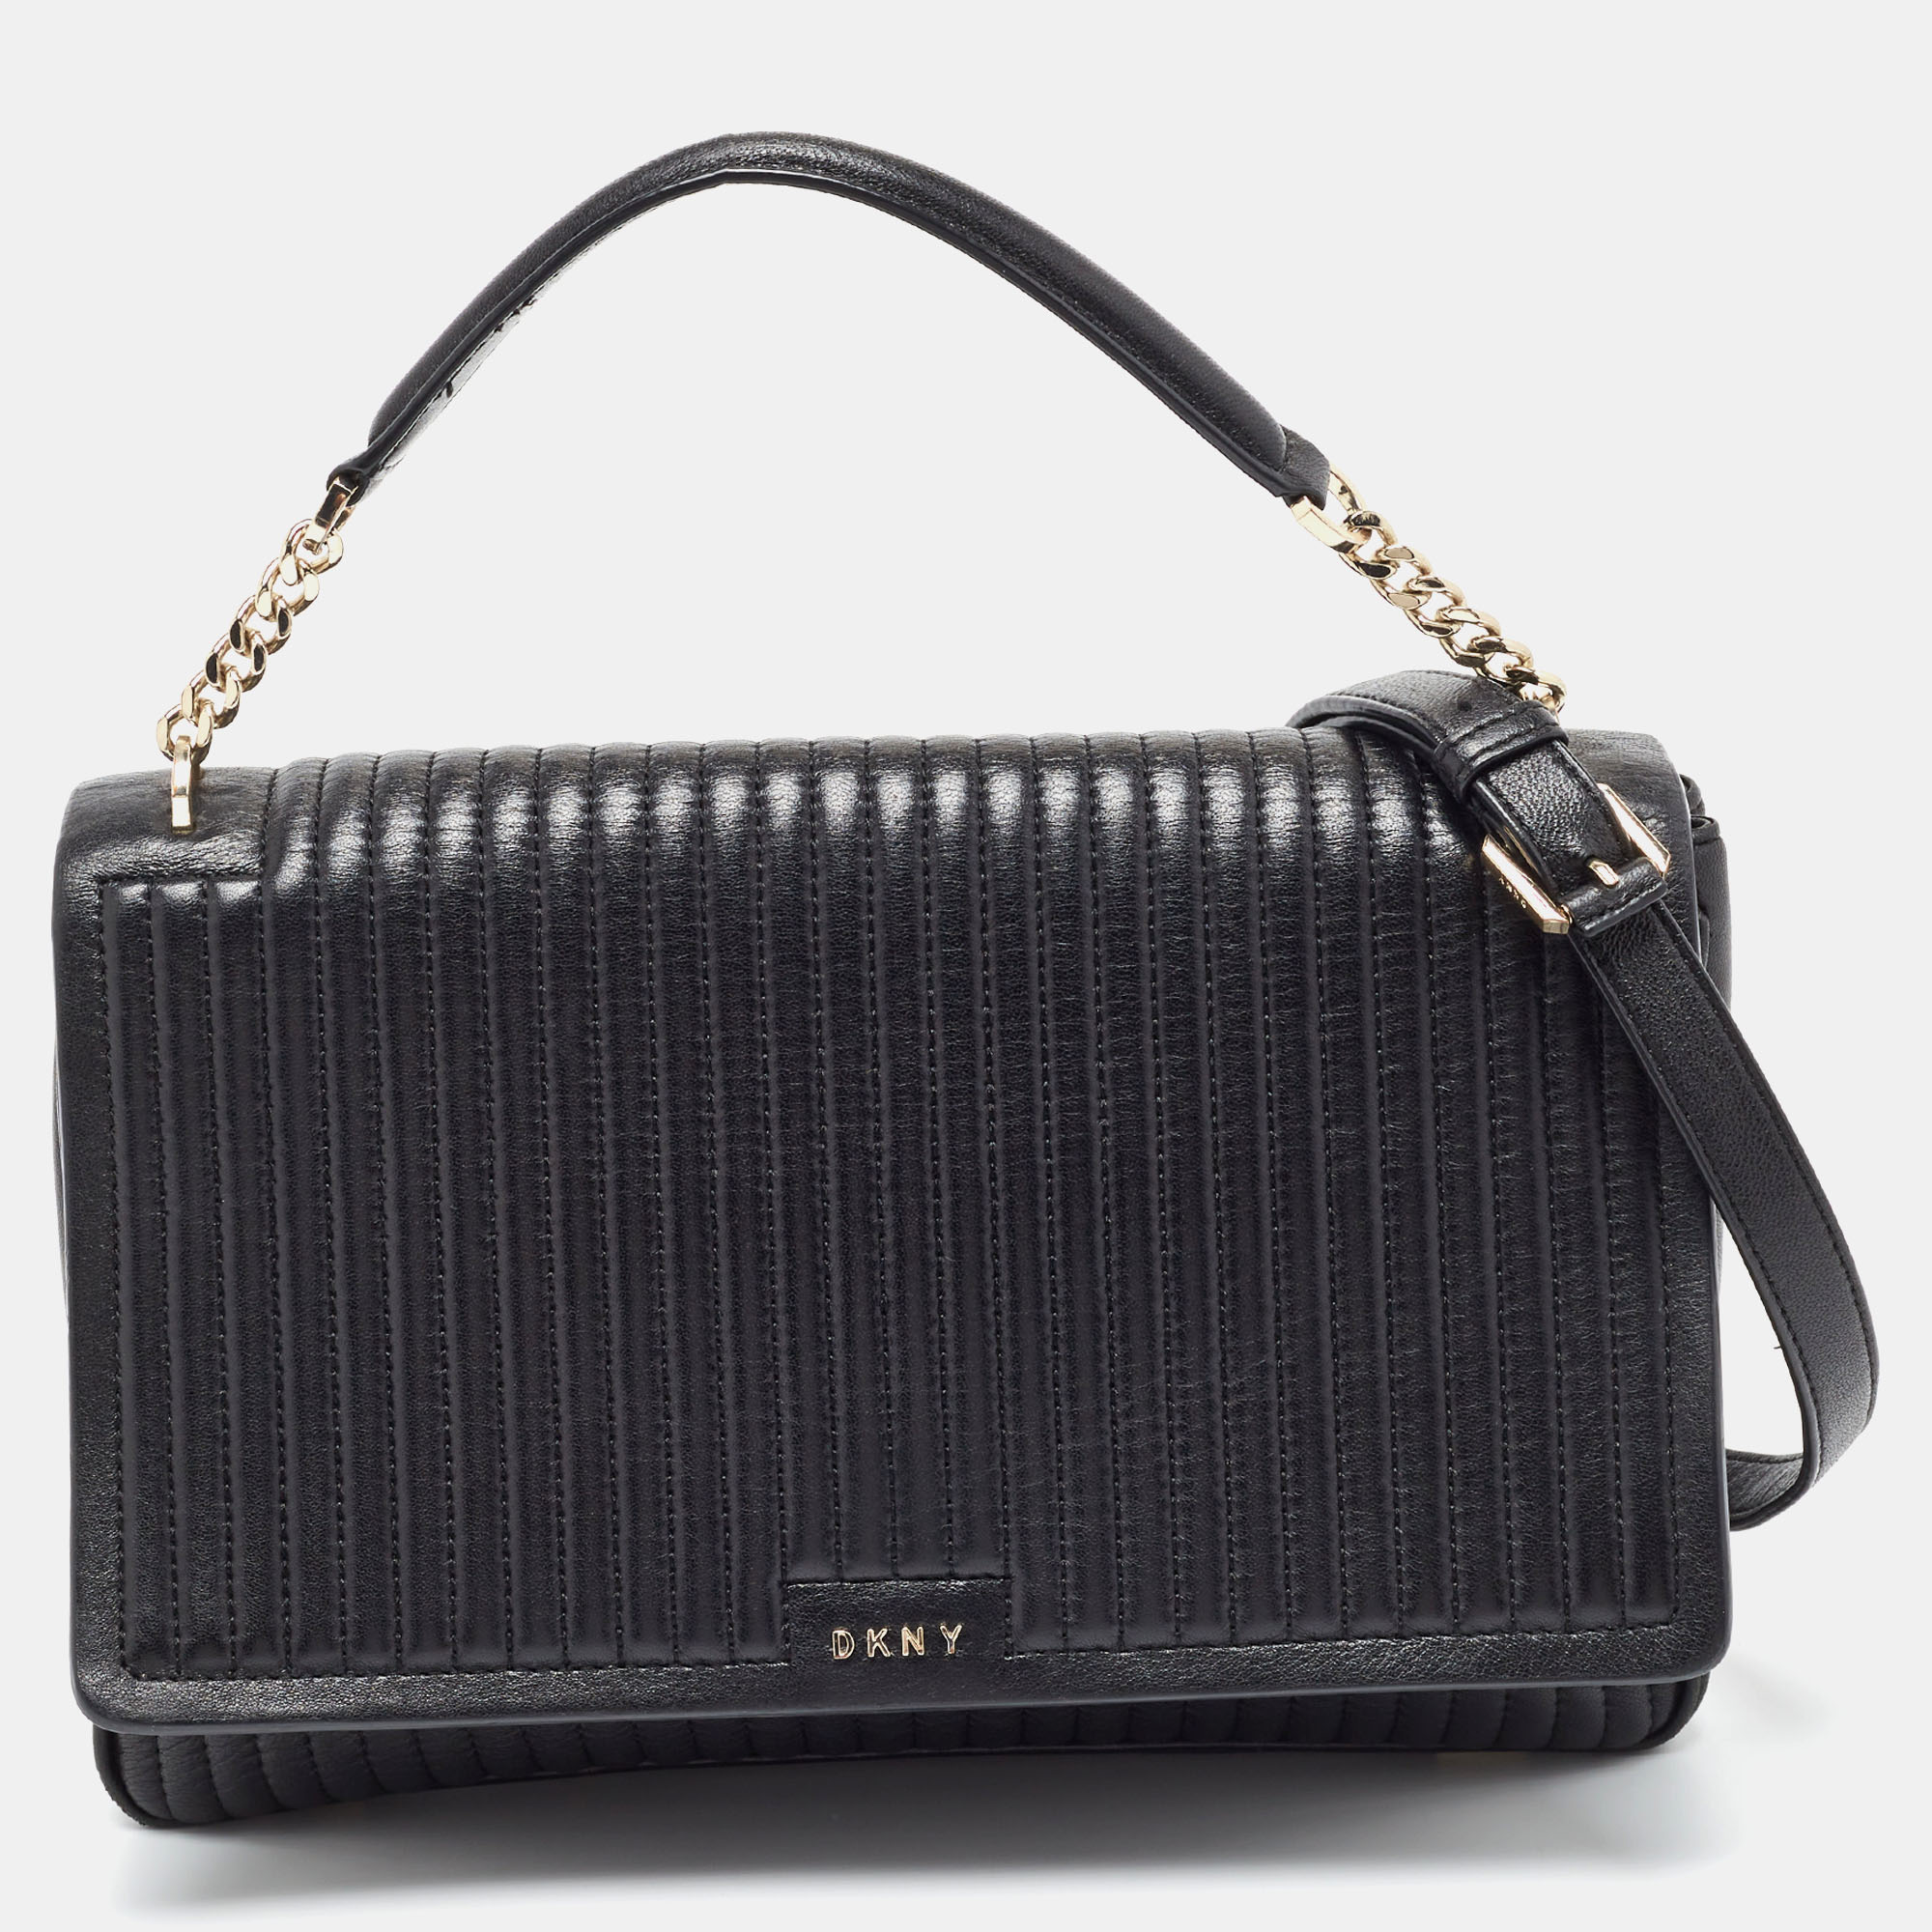 

DKNY Black Pinstripe Quilted Leather Gansevoort Flap Top Handle Bag